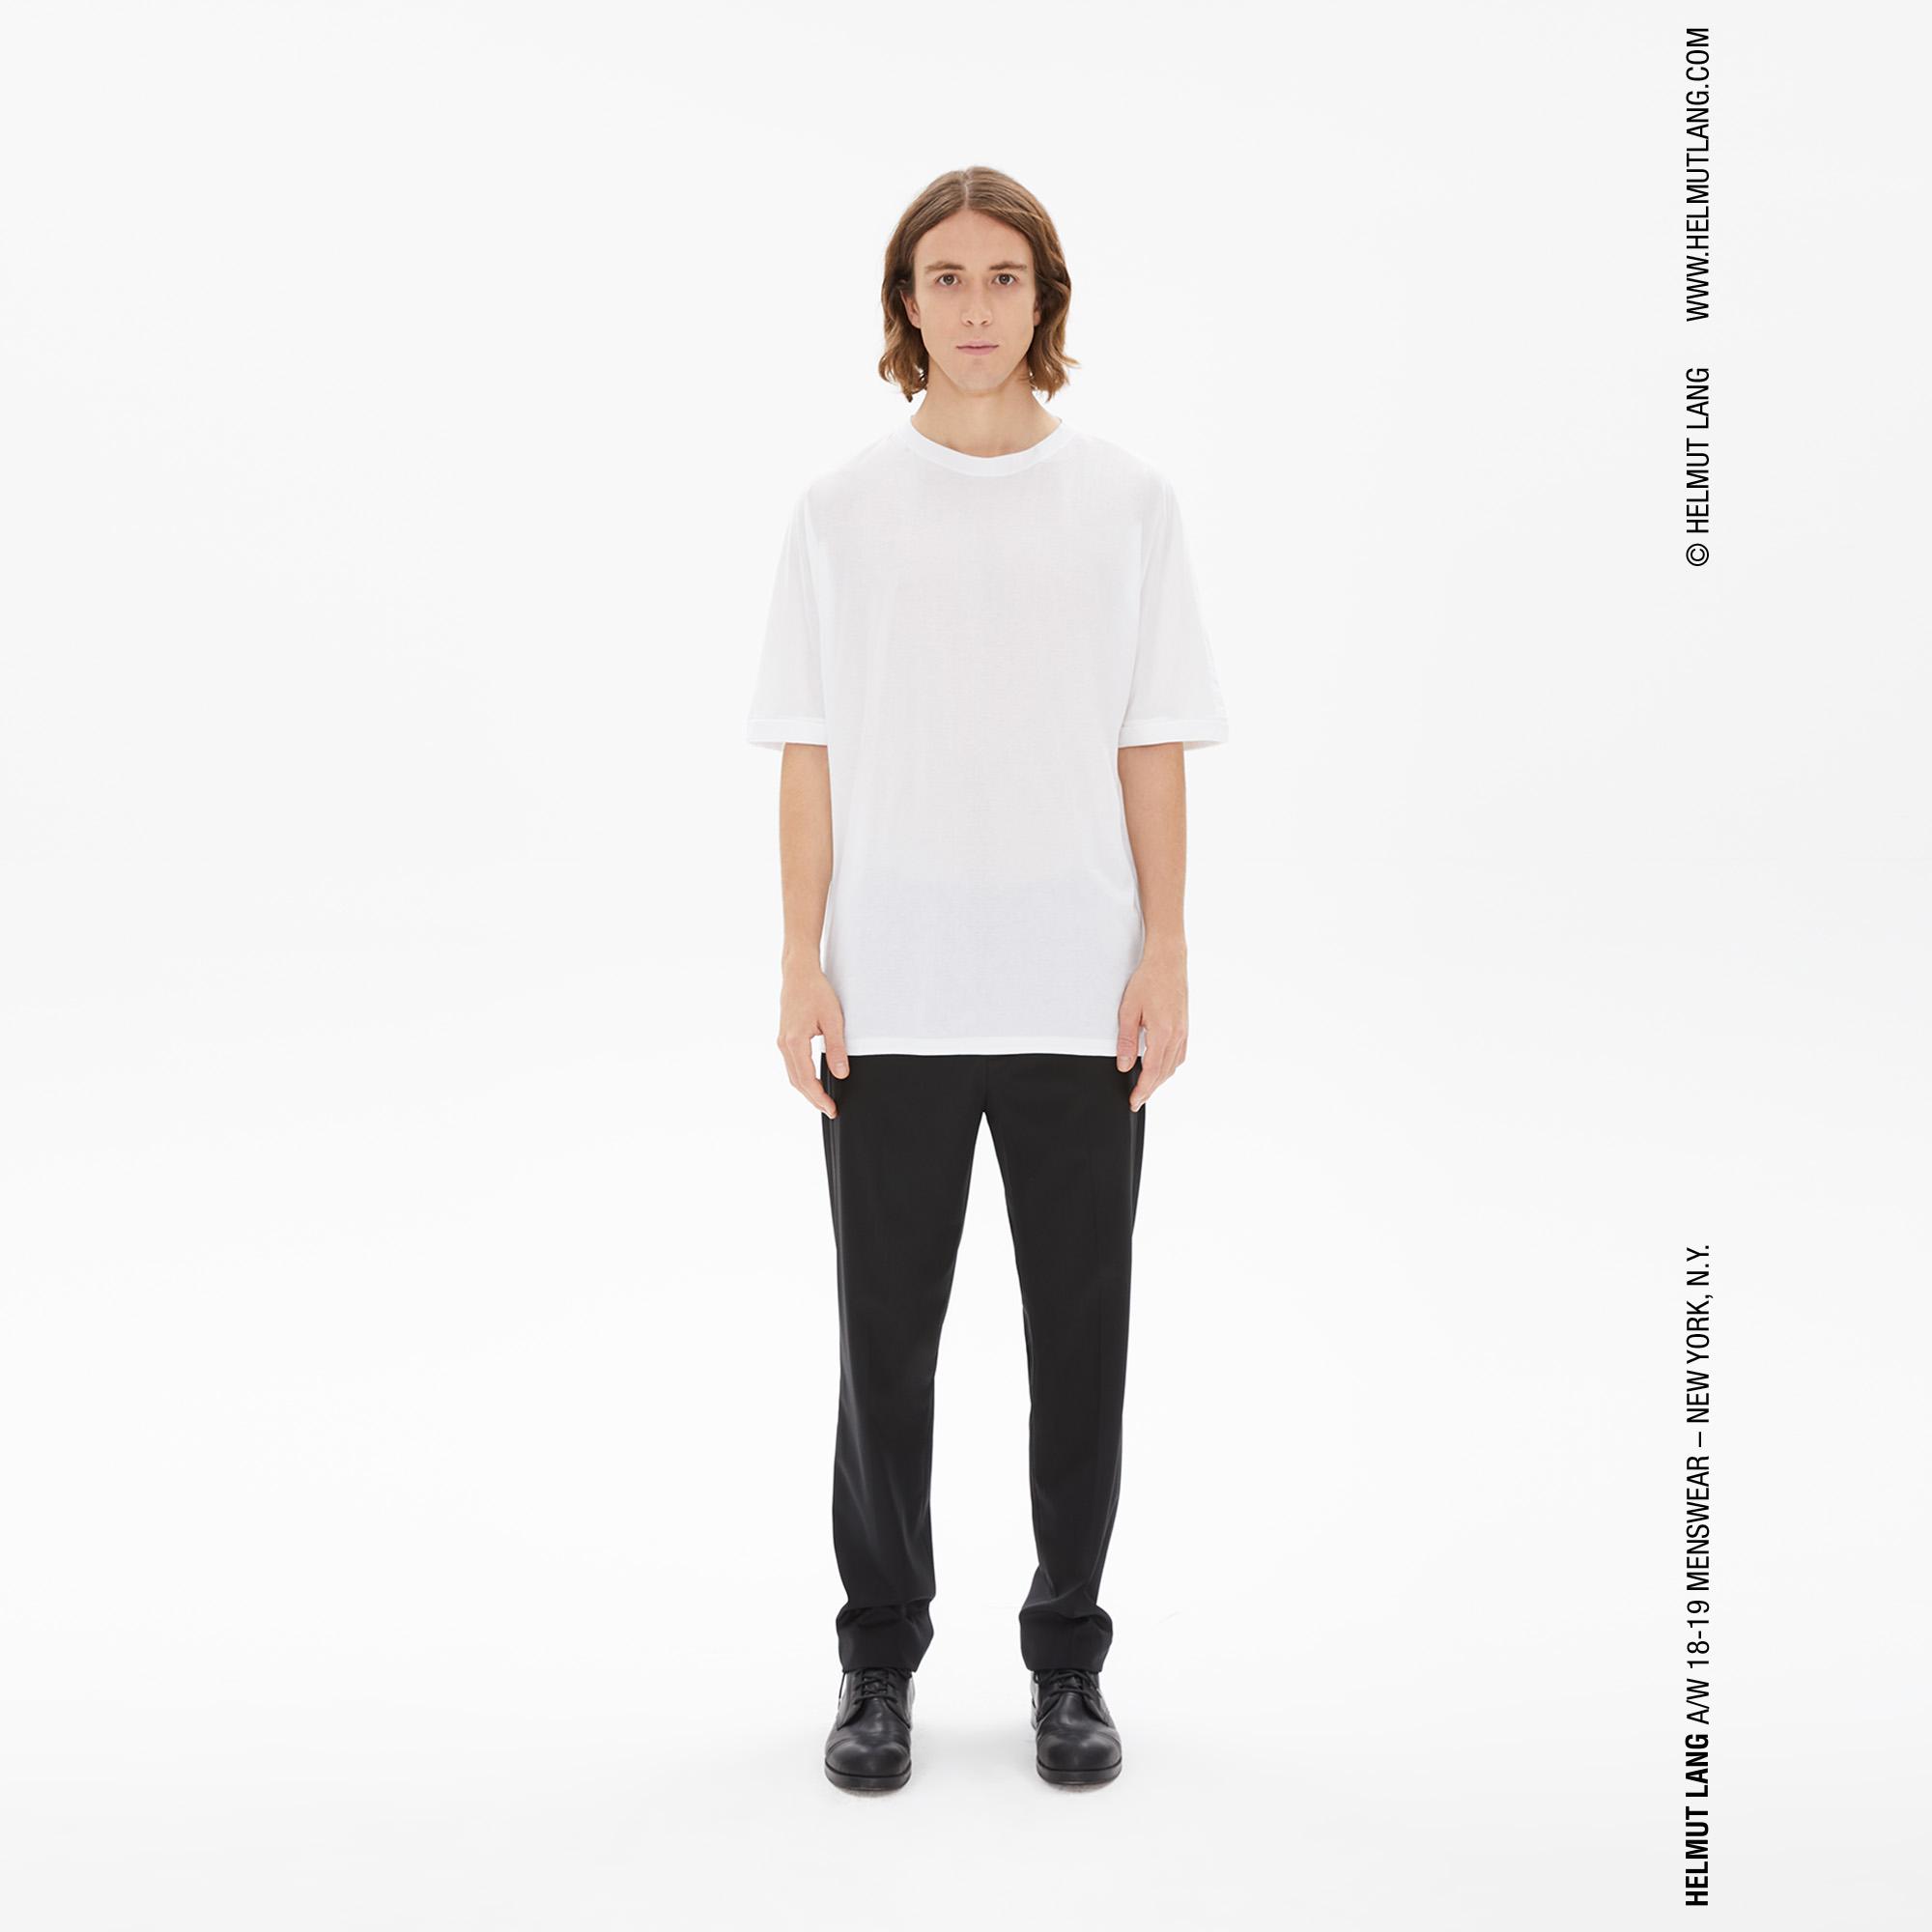 Helmut Lang Men's T-Shirts | WWW.HELMUTLANG.COM